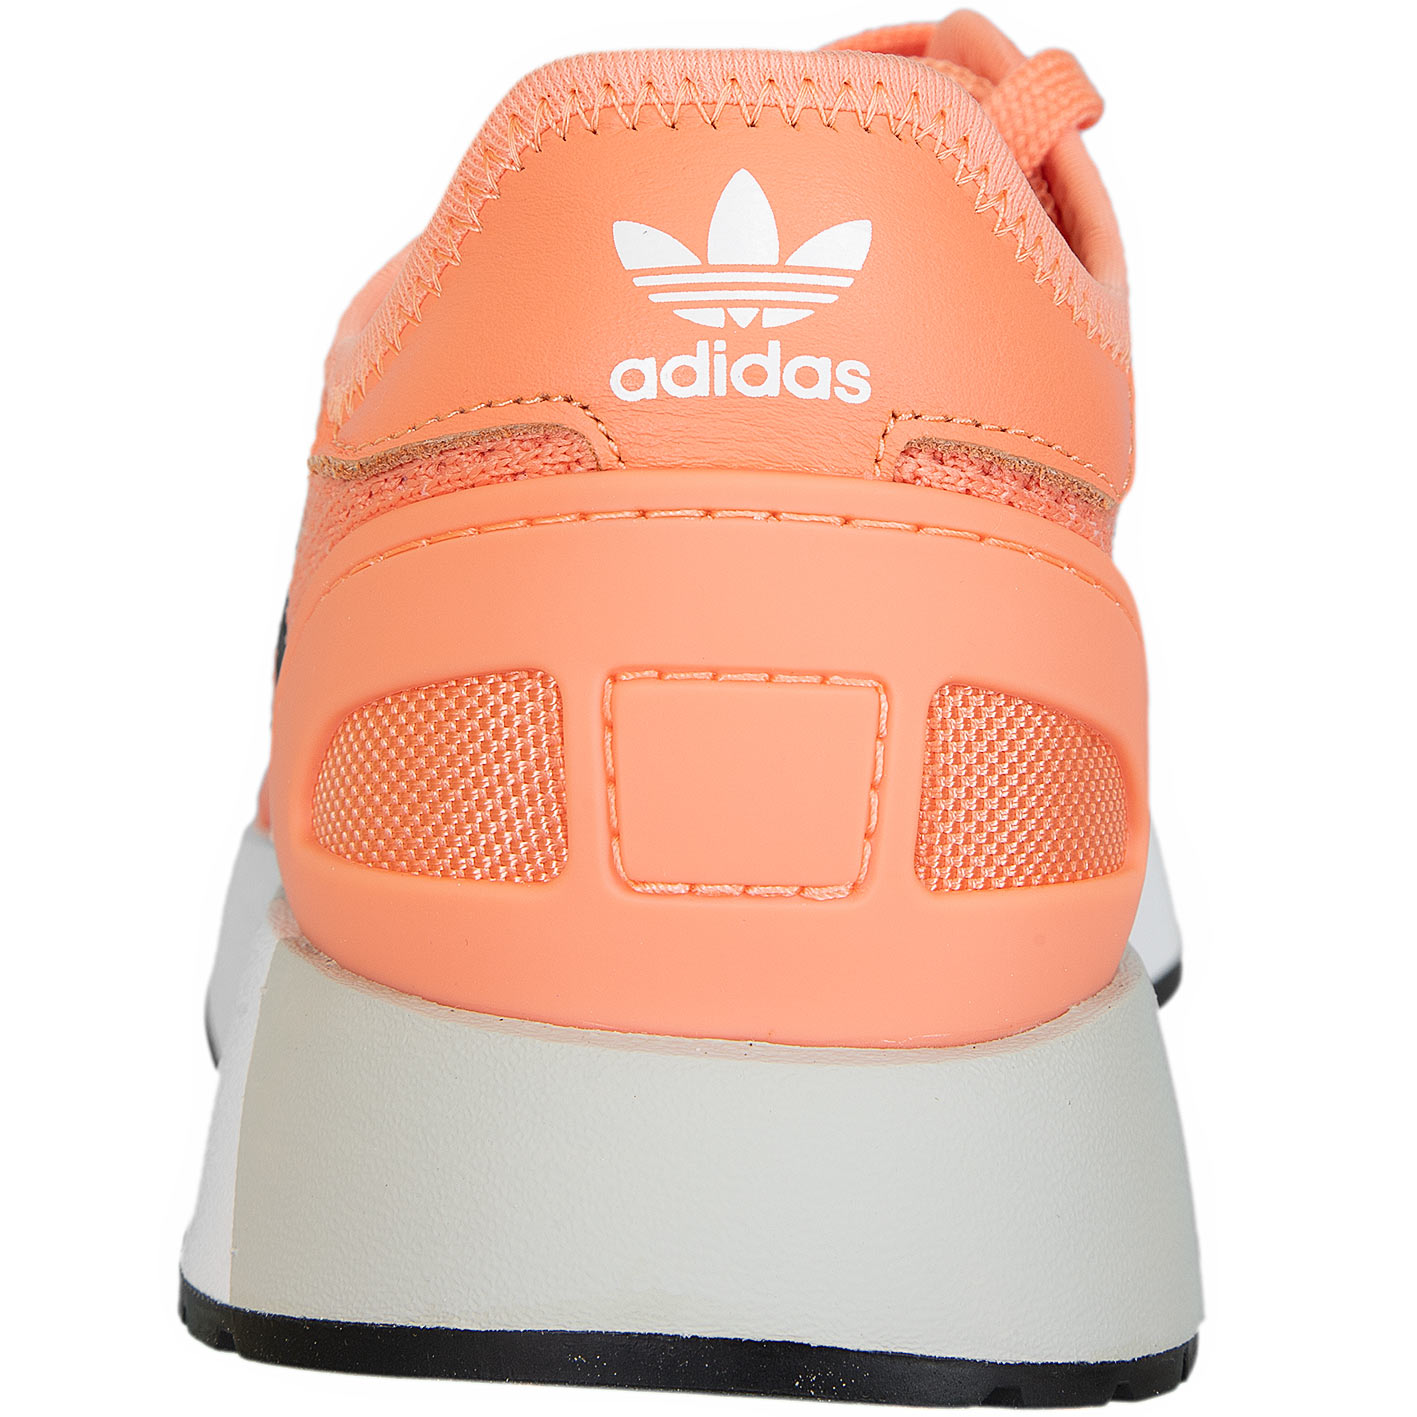 ☆ Adidas Originals Damen Sneaker N-5923 orange/schwarz - hier bestellen!